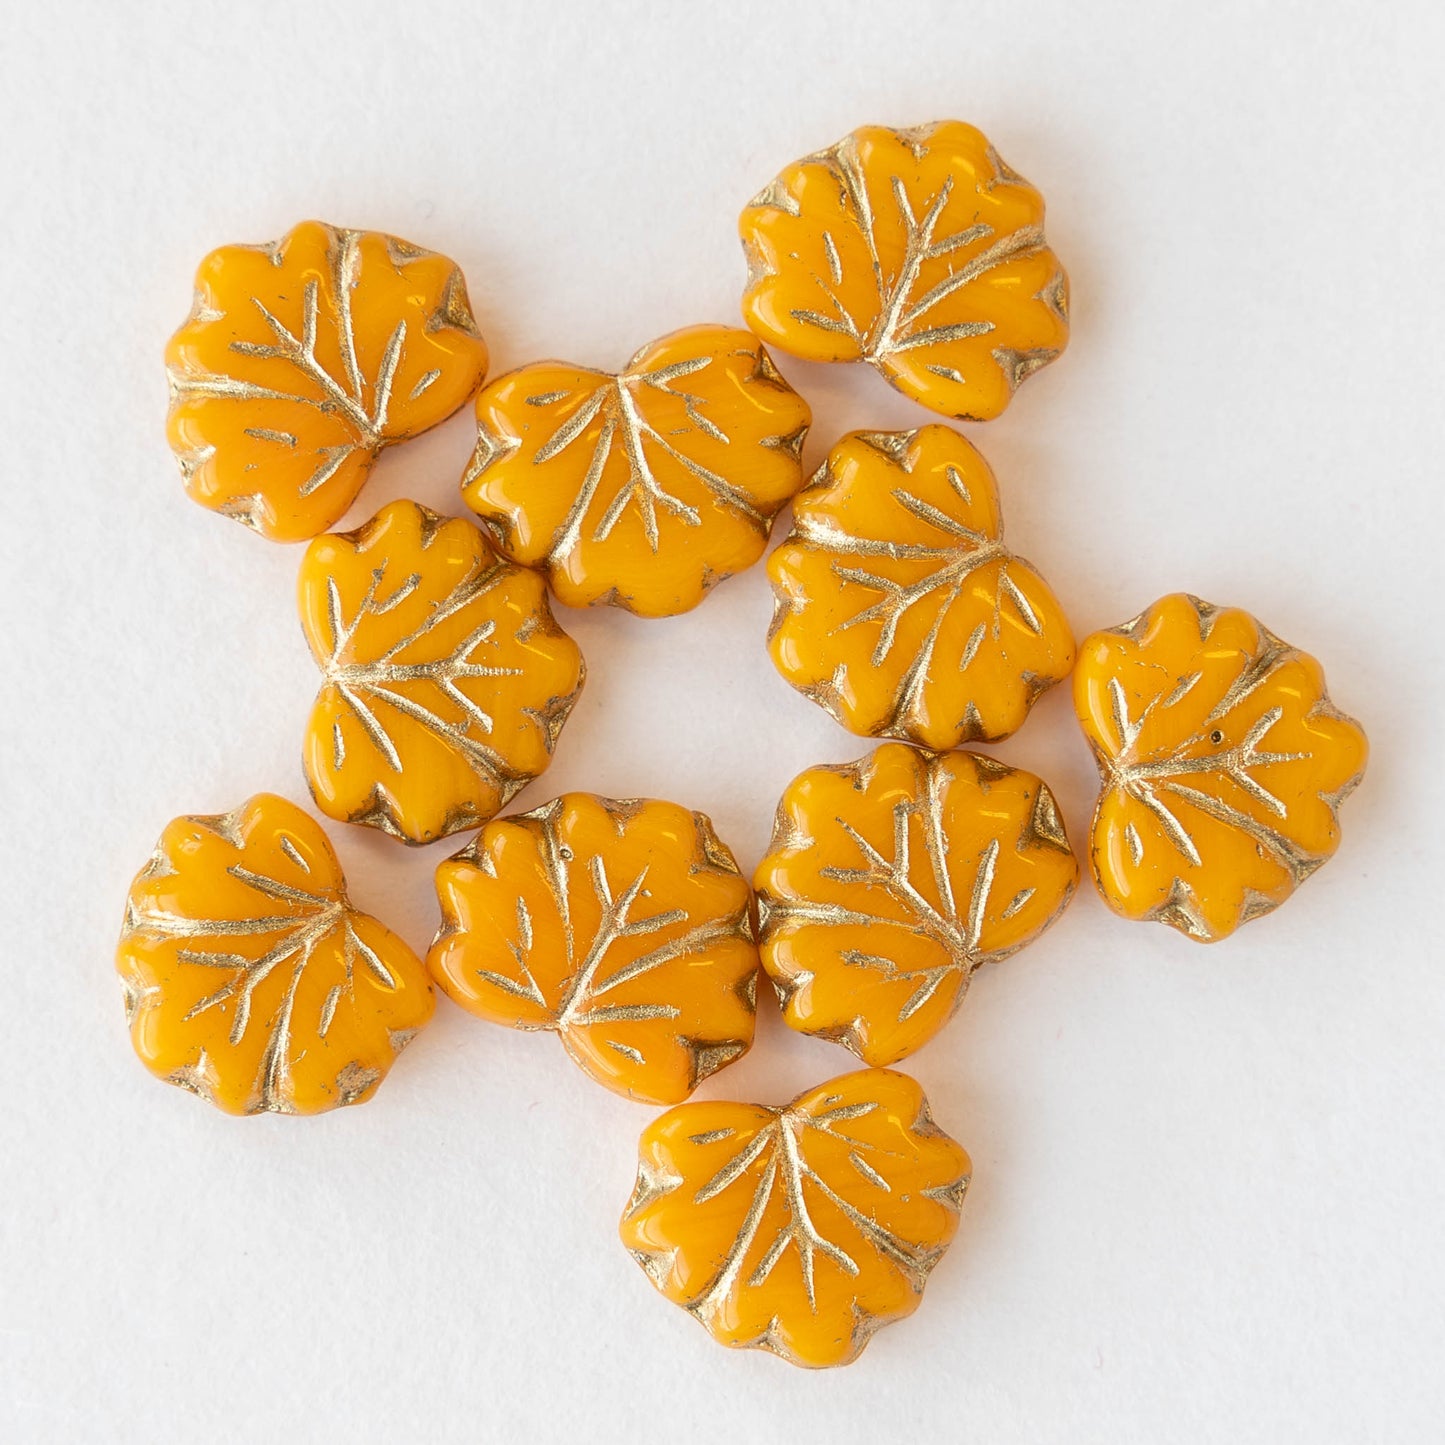 13mm Maple Leaf Beads - Light Orange with Gold Wash - 12 Beads